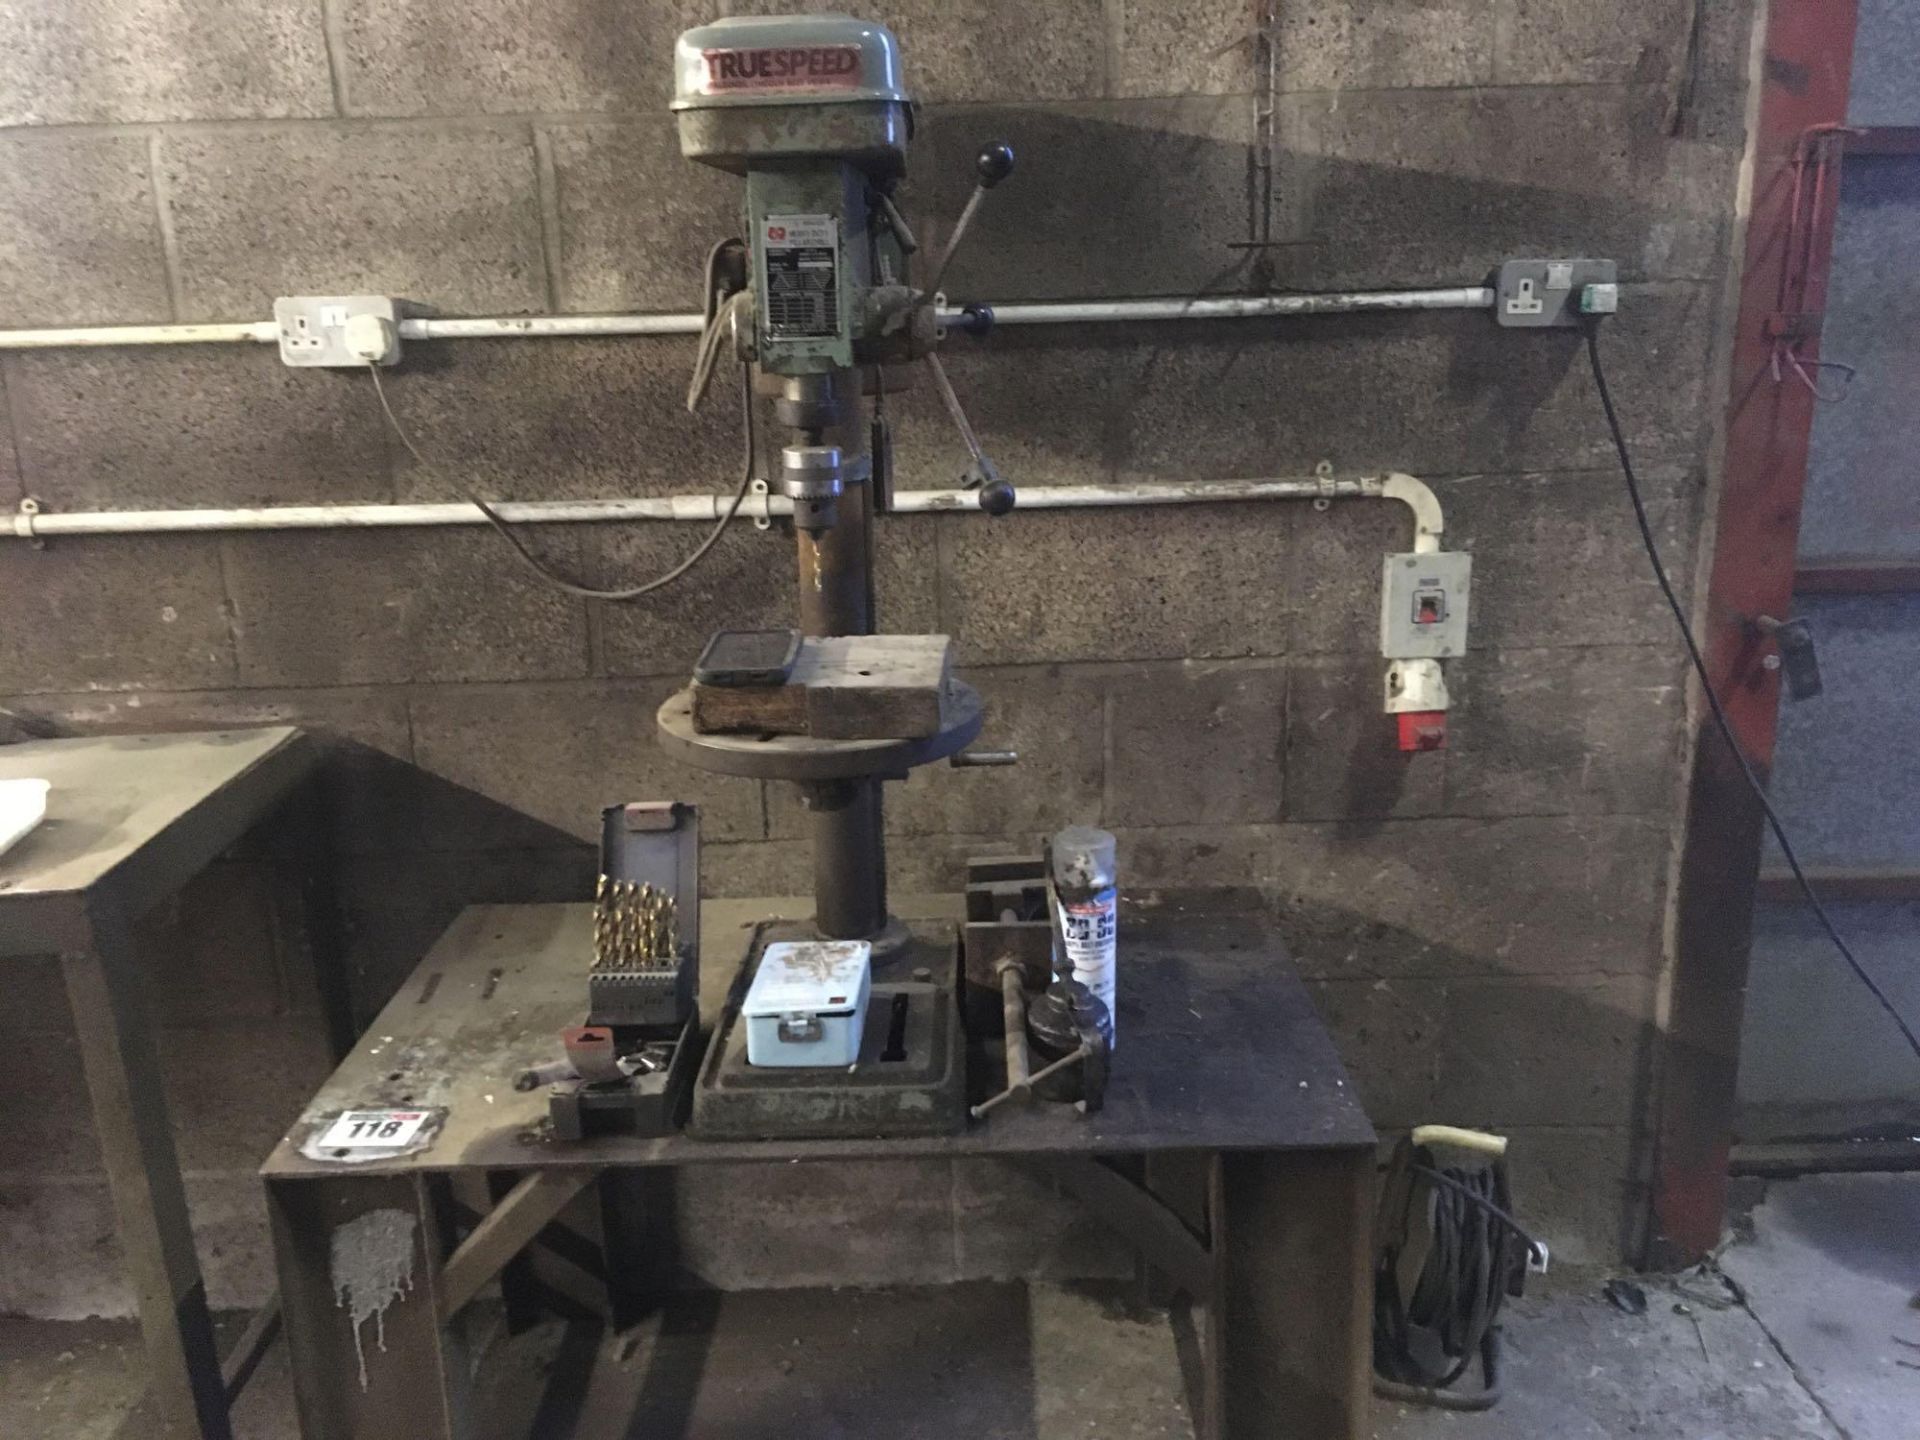 Metal workbench and Truespeed pillar drill